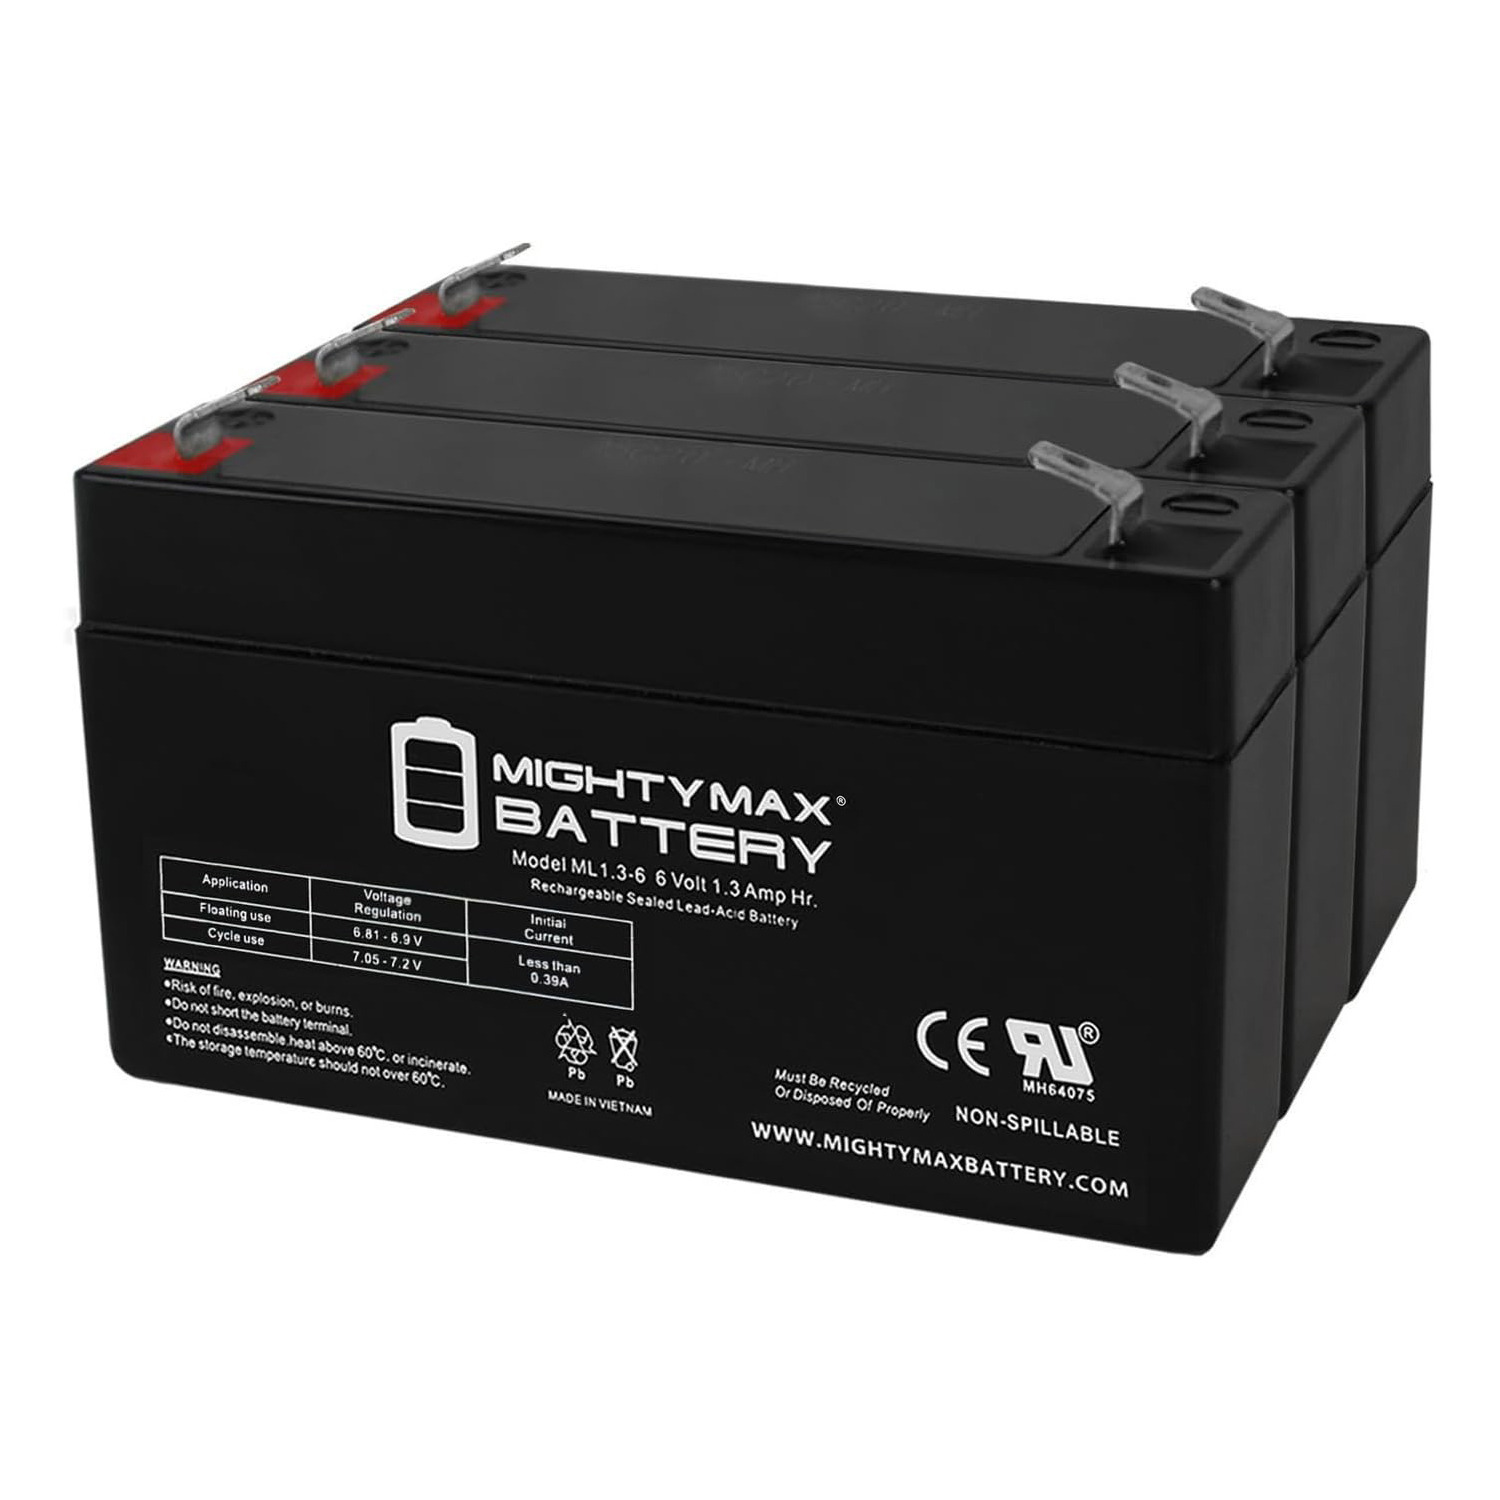 6V 1.3Ah Portalac GS PE6V1.3F1 Emergency Light Battery - 3 Pack